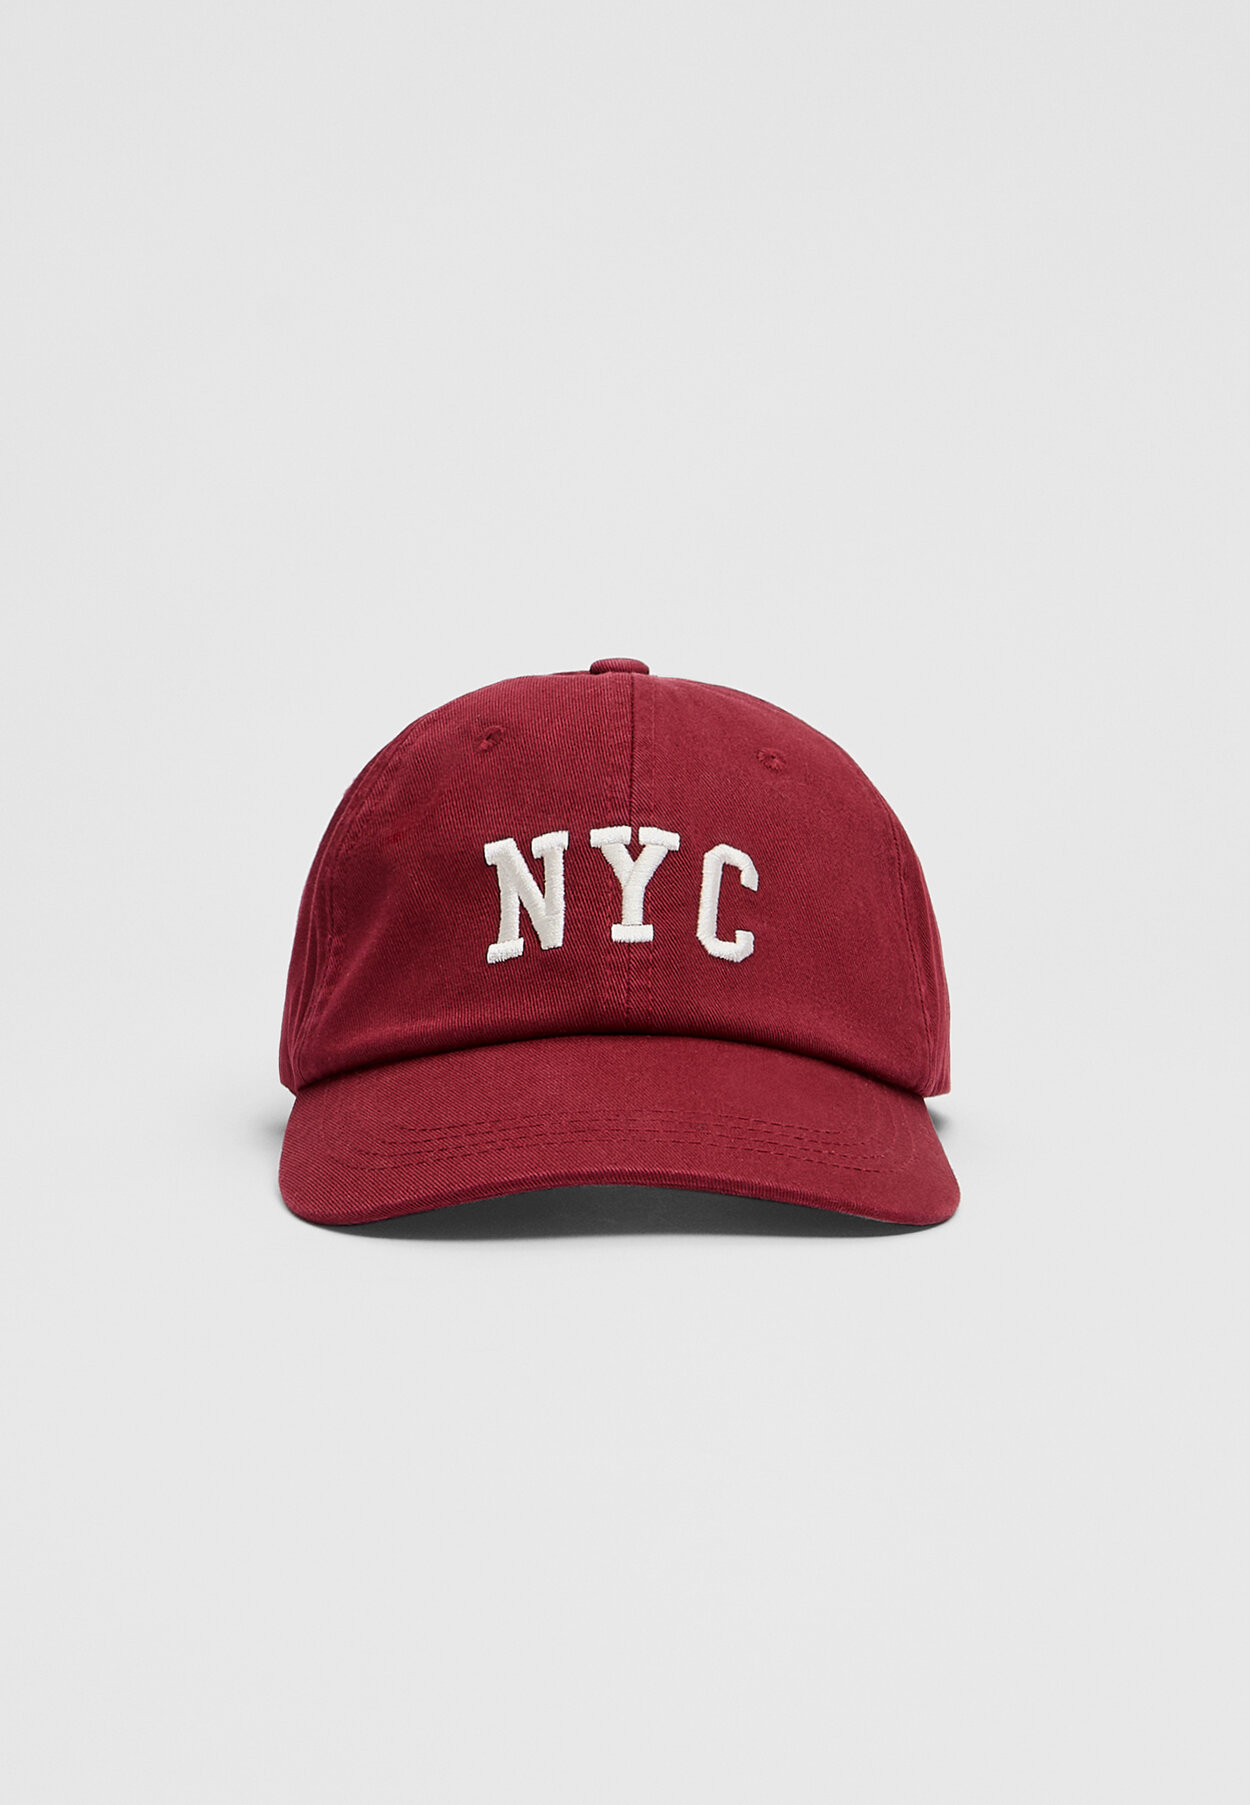 Gorra bordado NYC